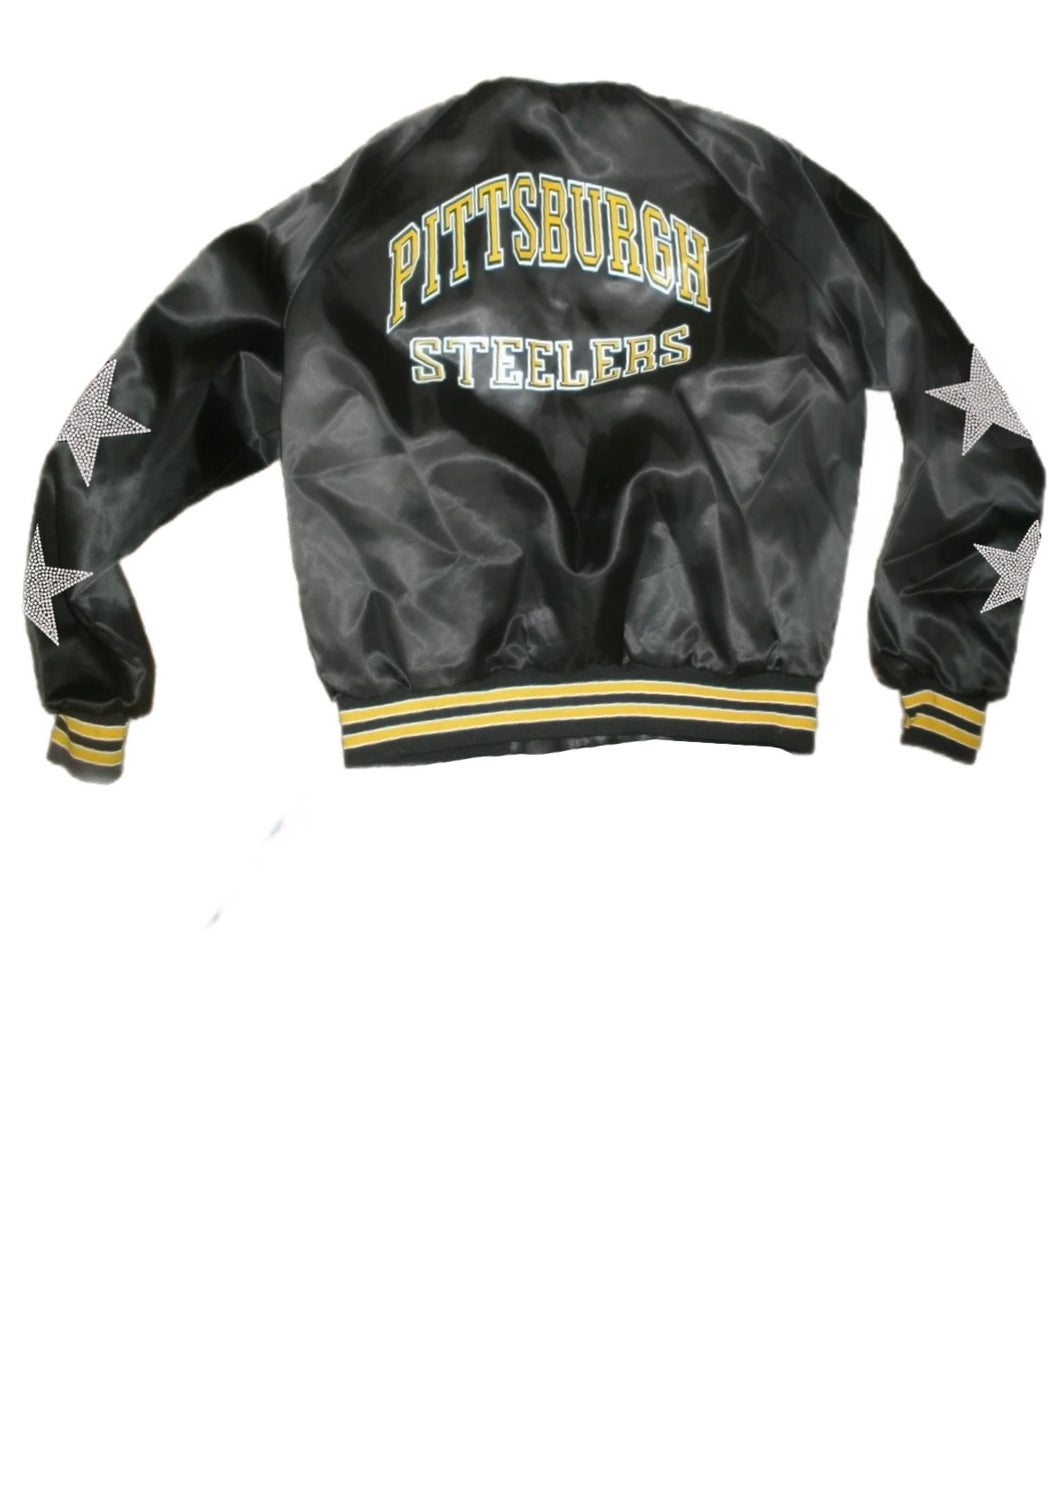 Pittsburgh Steelers, NFL “Rare Find” One of a KIND Vintage Satin Jacket with Crystal Star Design